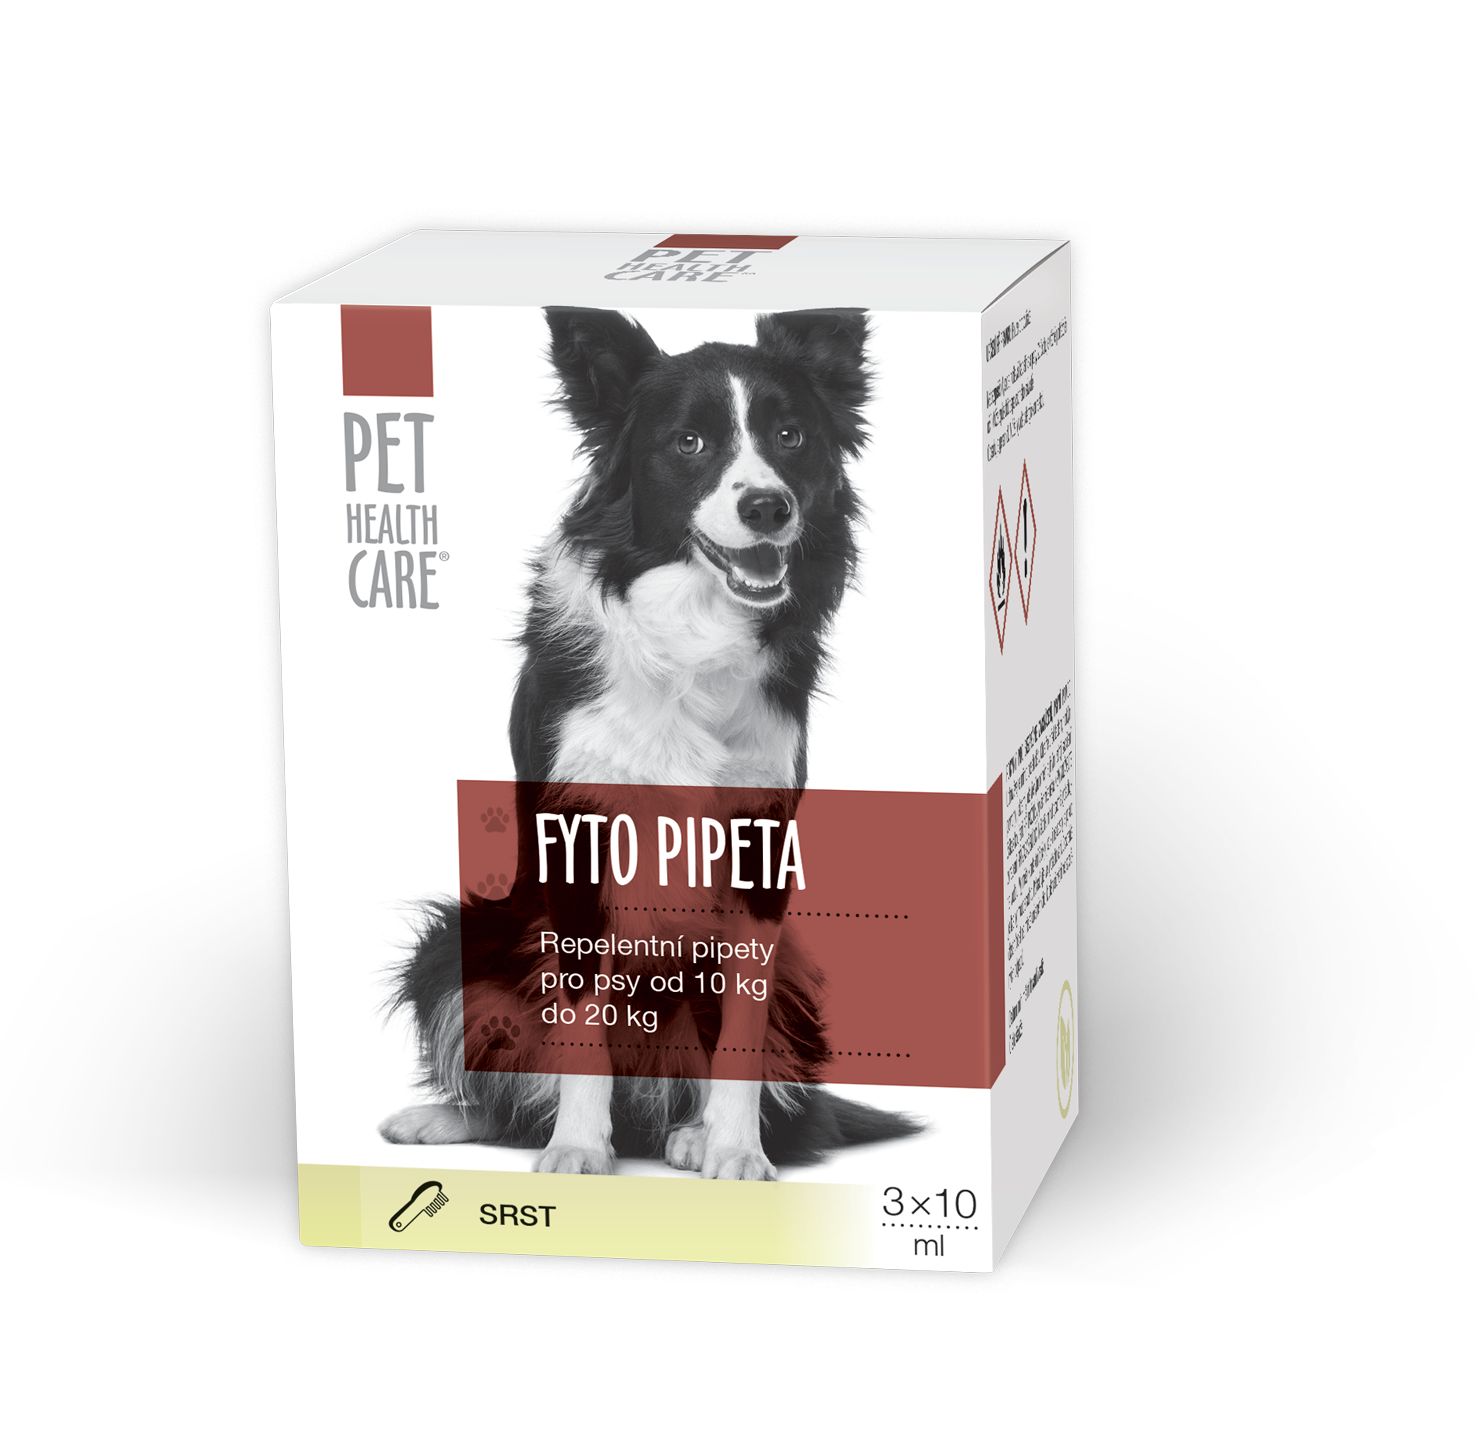 Pet health care Fytopipeta pes 10 - 20 kg 3x10 ml Pet health care